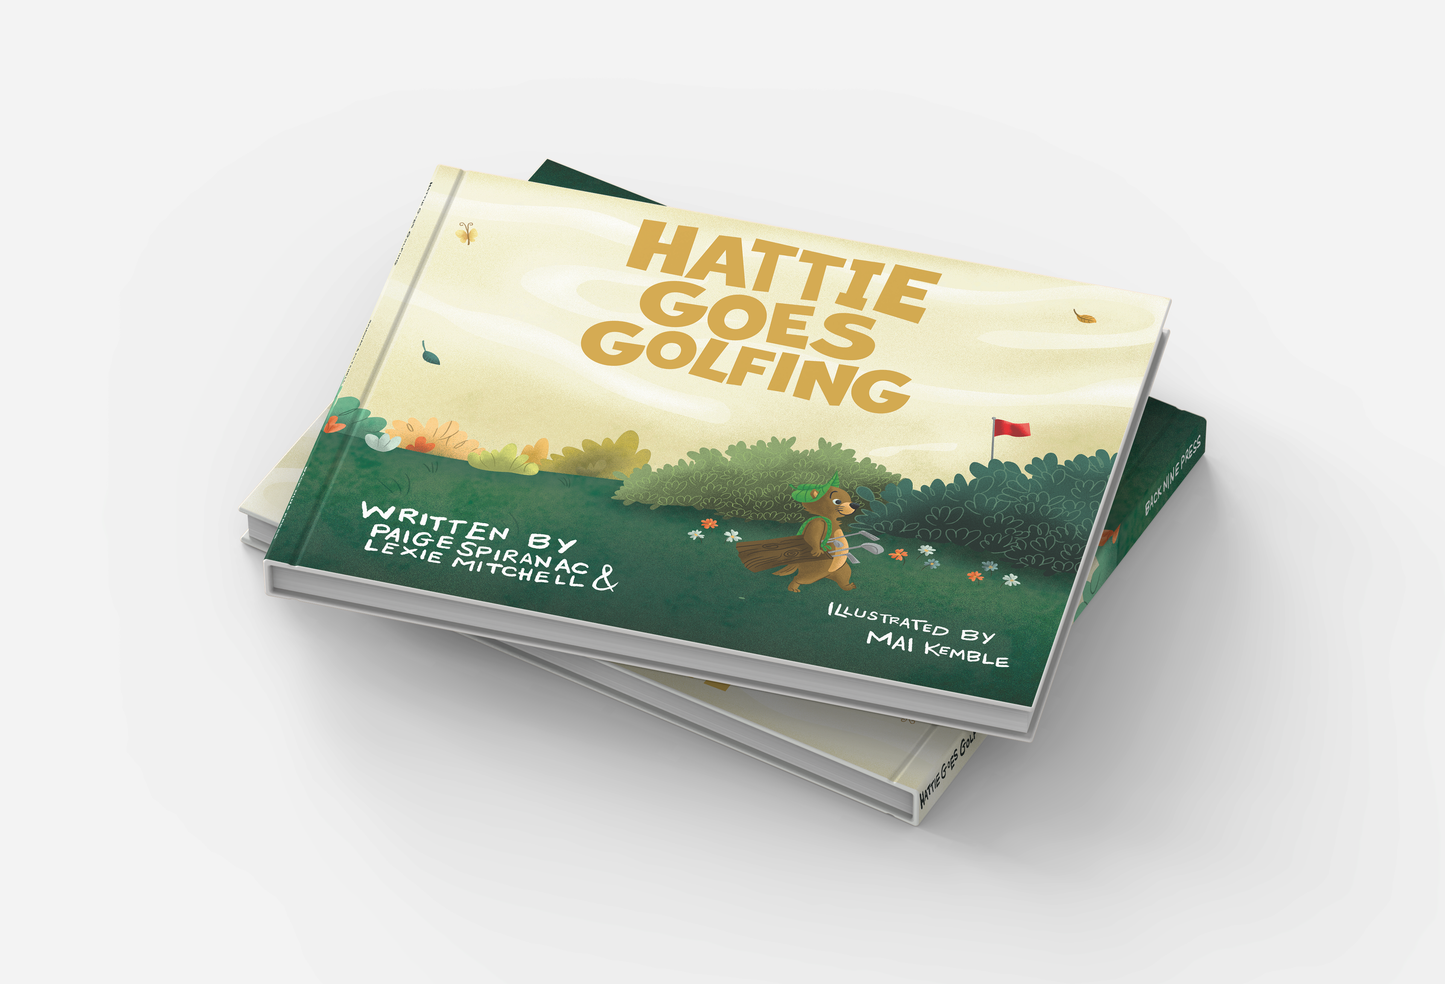 Hattie Goes Golfing (Signed edition)